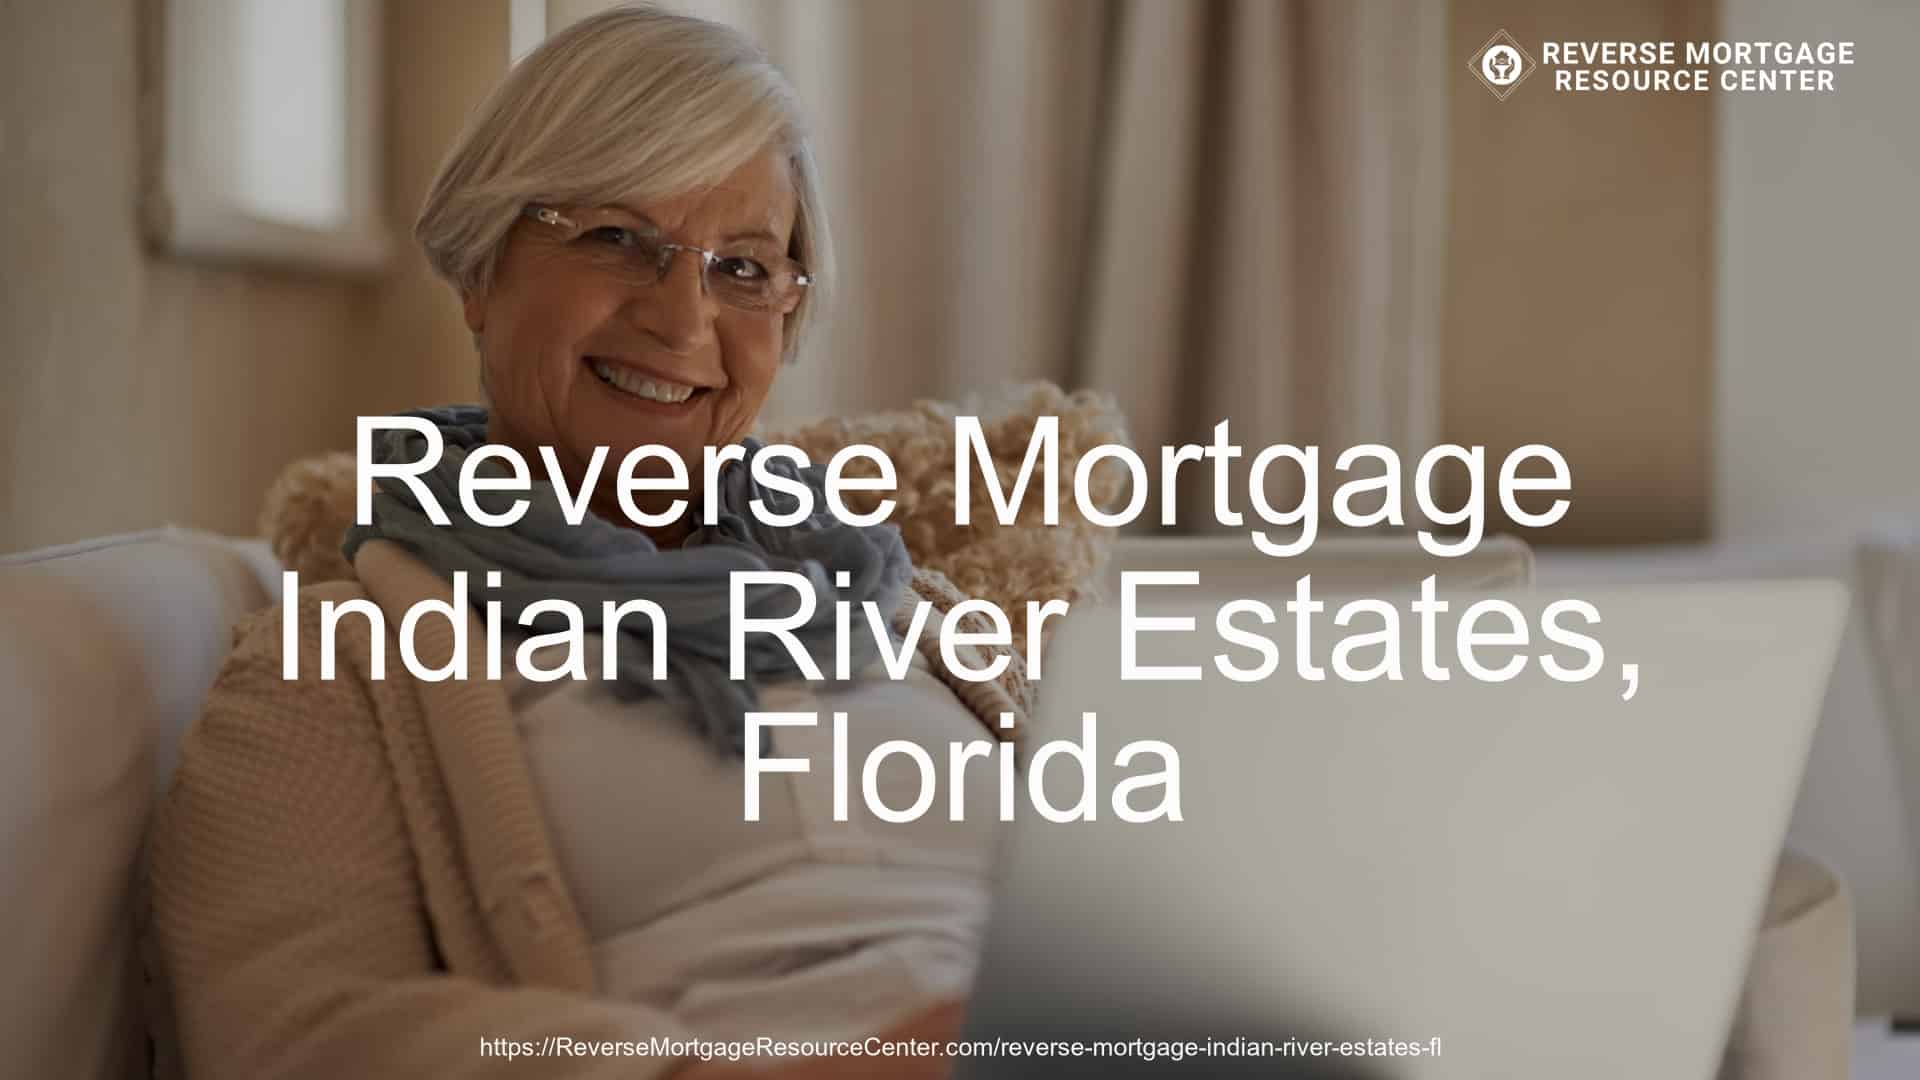 Reverse Mortgage Loans in Indian River Estates Florida